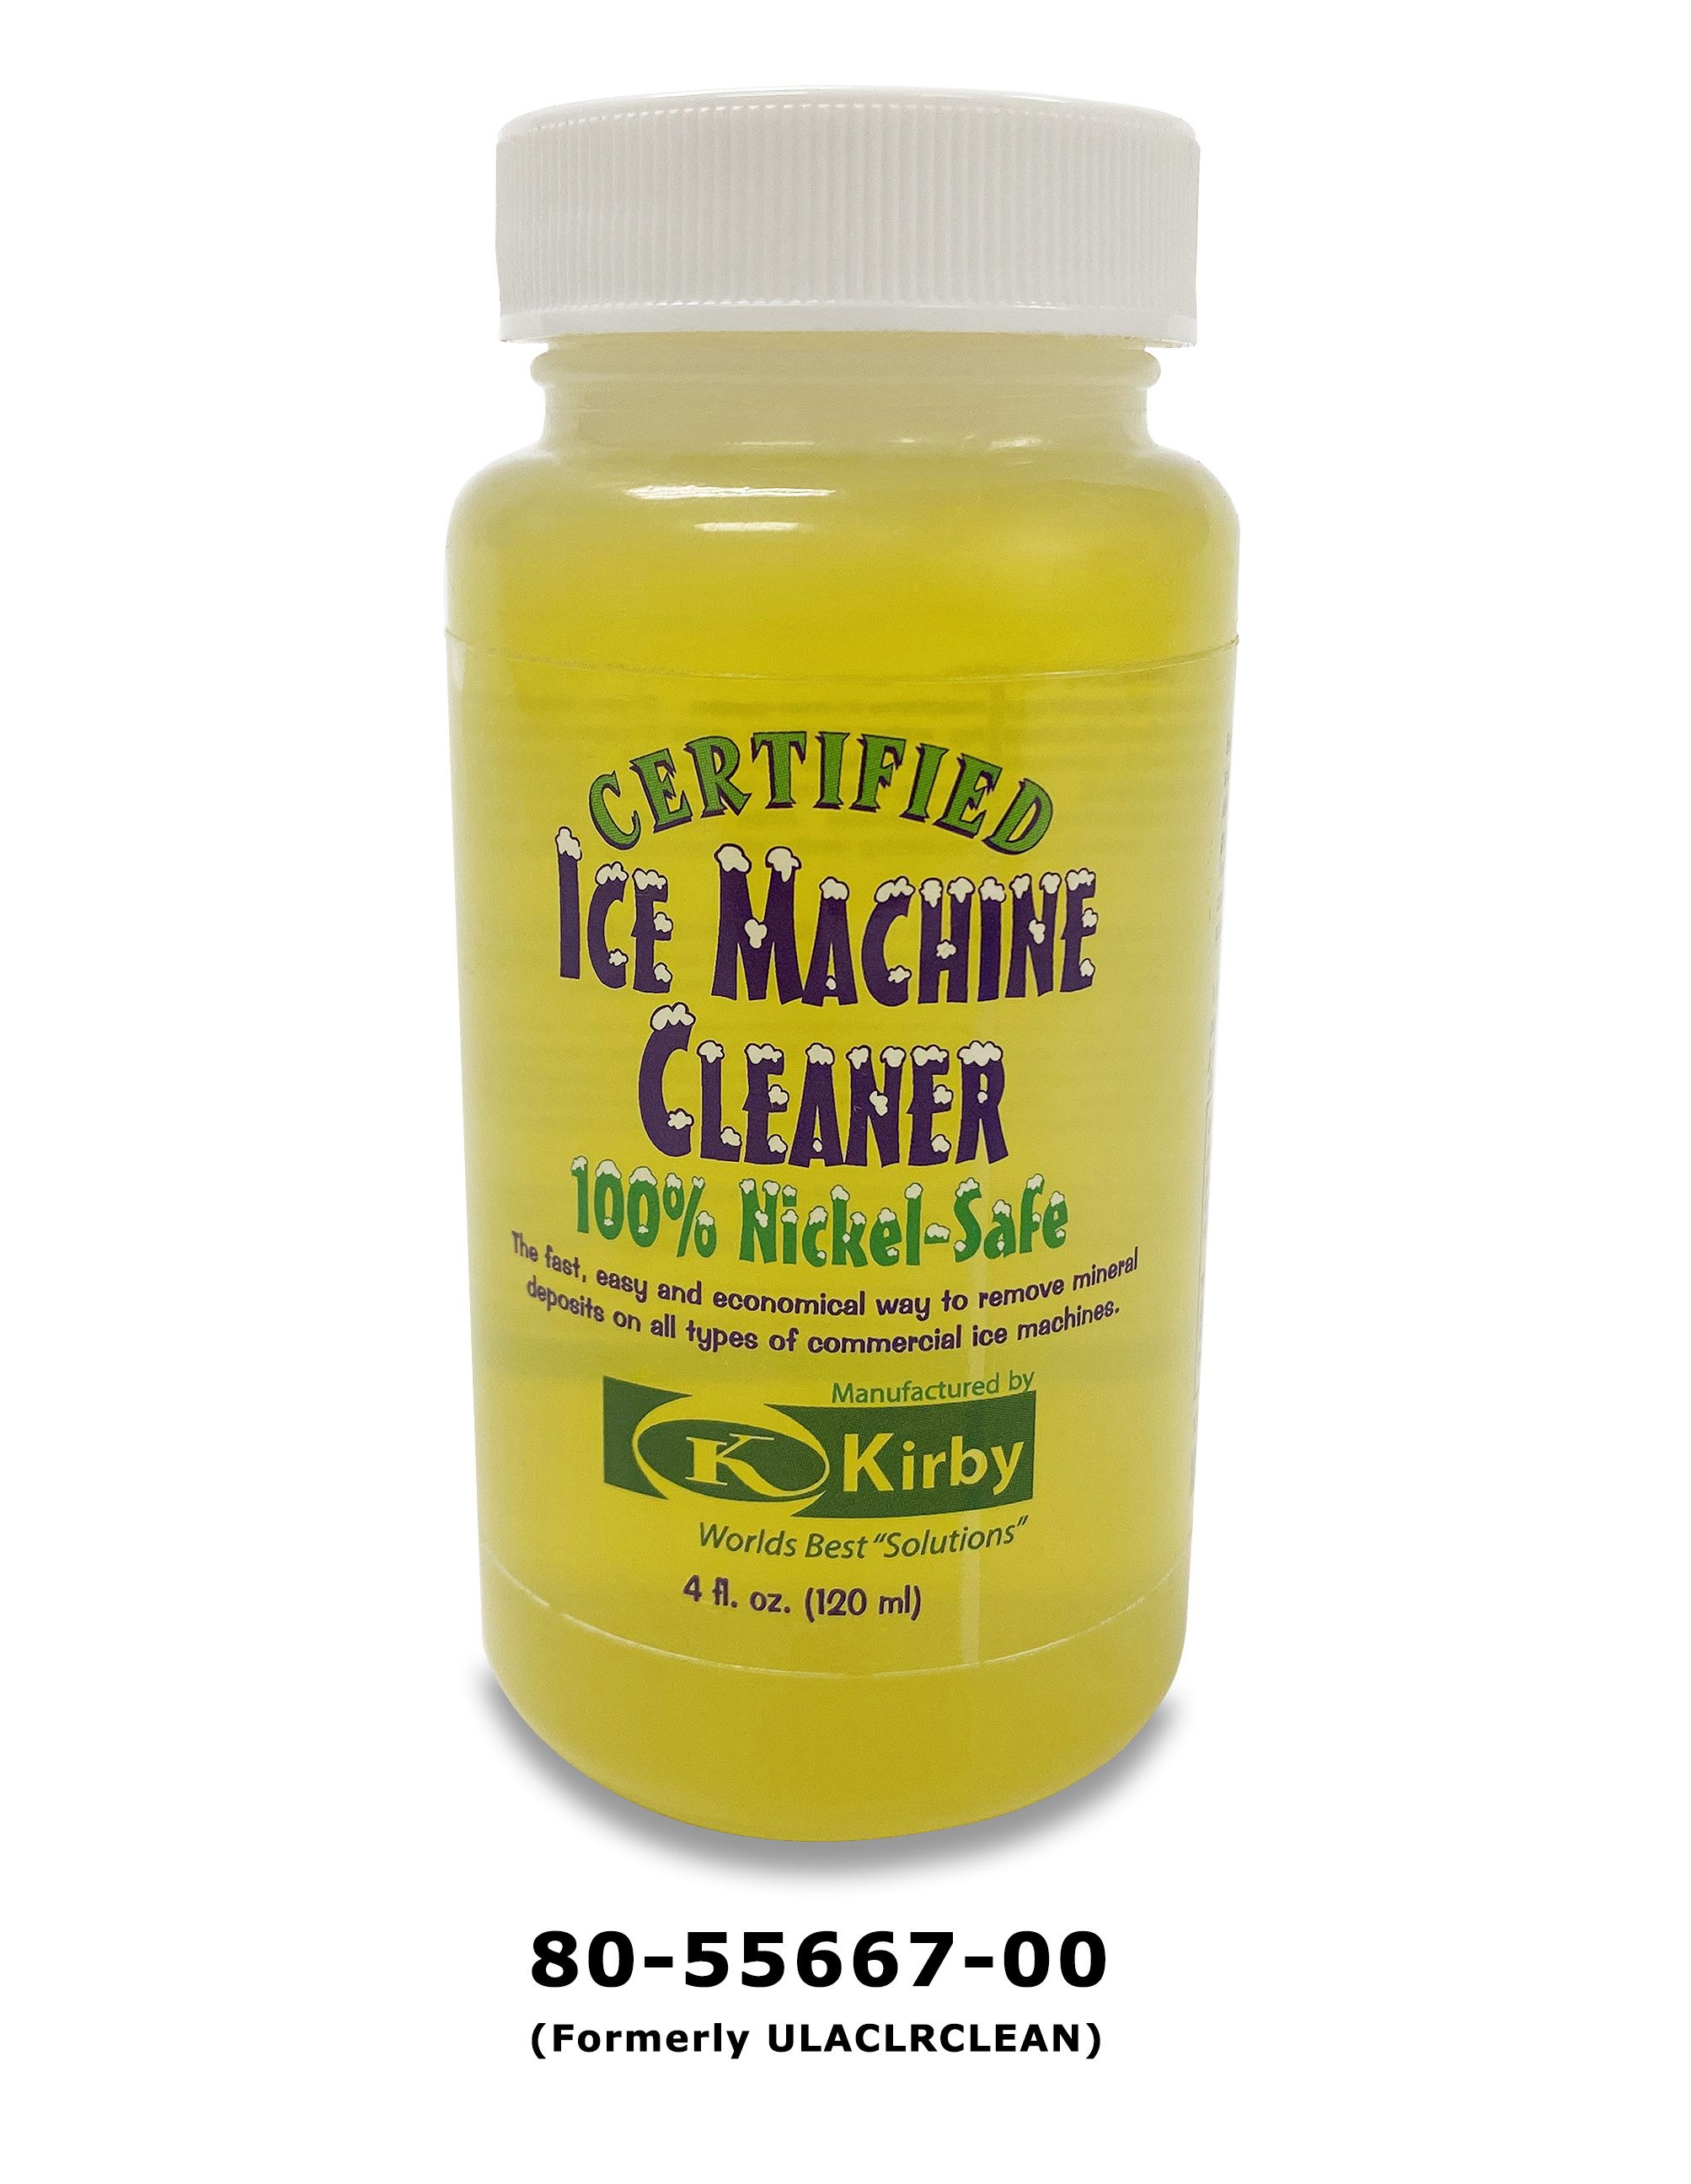 Ice Maker Machine Cleaner Uline, GE Monogram, KitchenAid, Kenmore